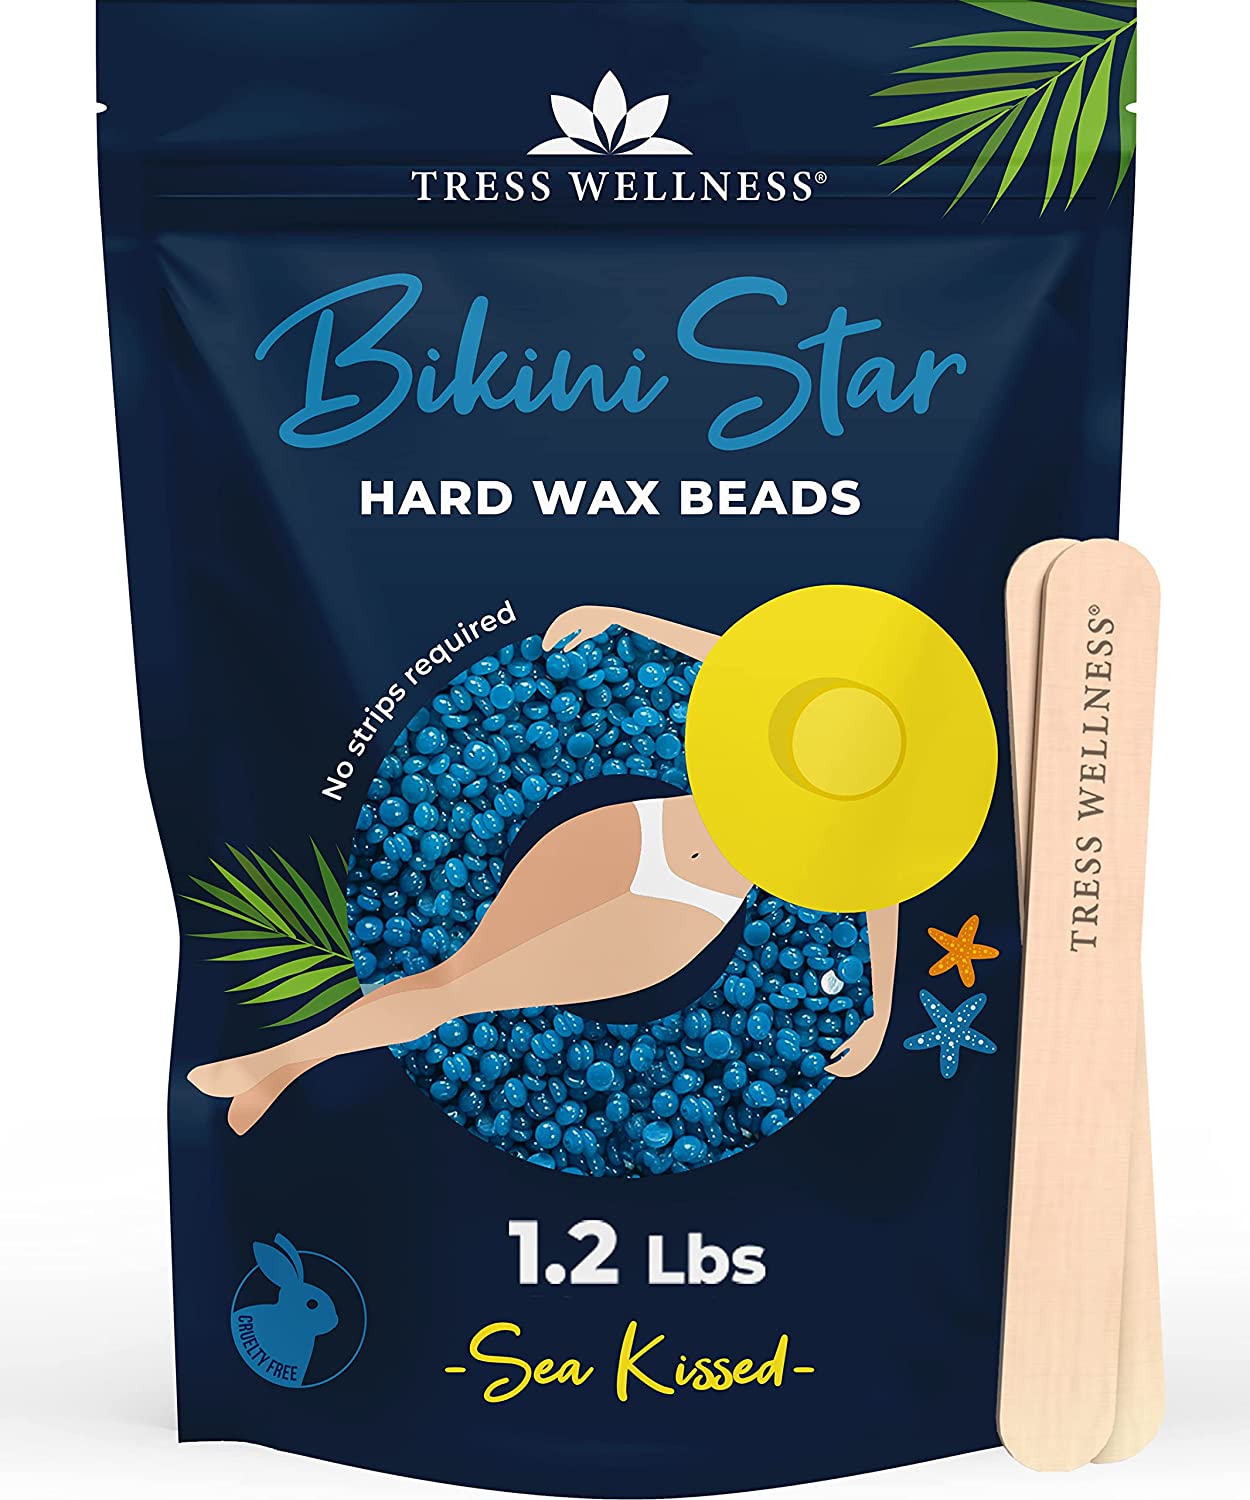 2.5lb Wax Beads Hair Removal Kit Lifestance Hard Wax Beans Brazilian Bikini Wax Beads with 30 Applicators Blue Wax for Face Facial Body Legs Women Men